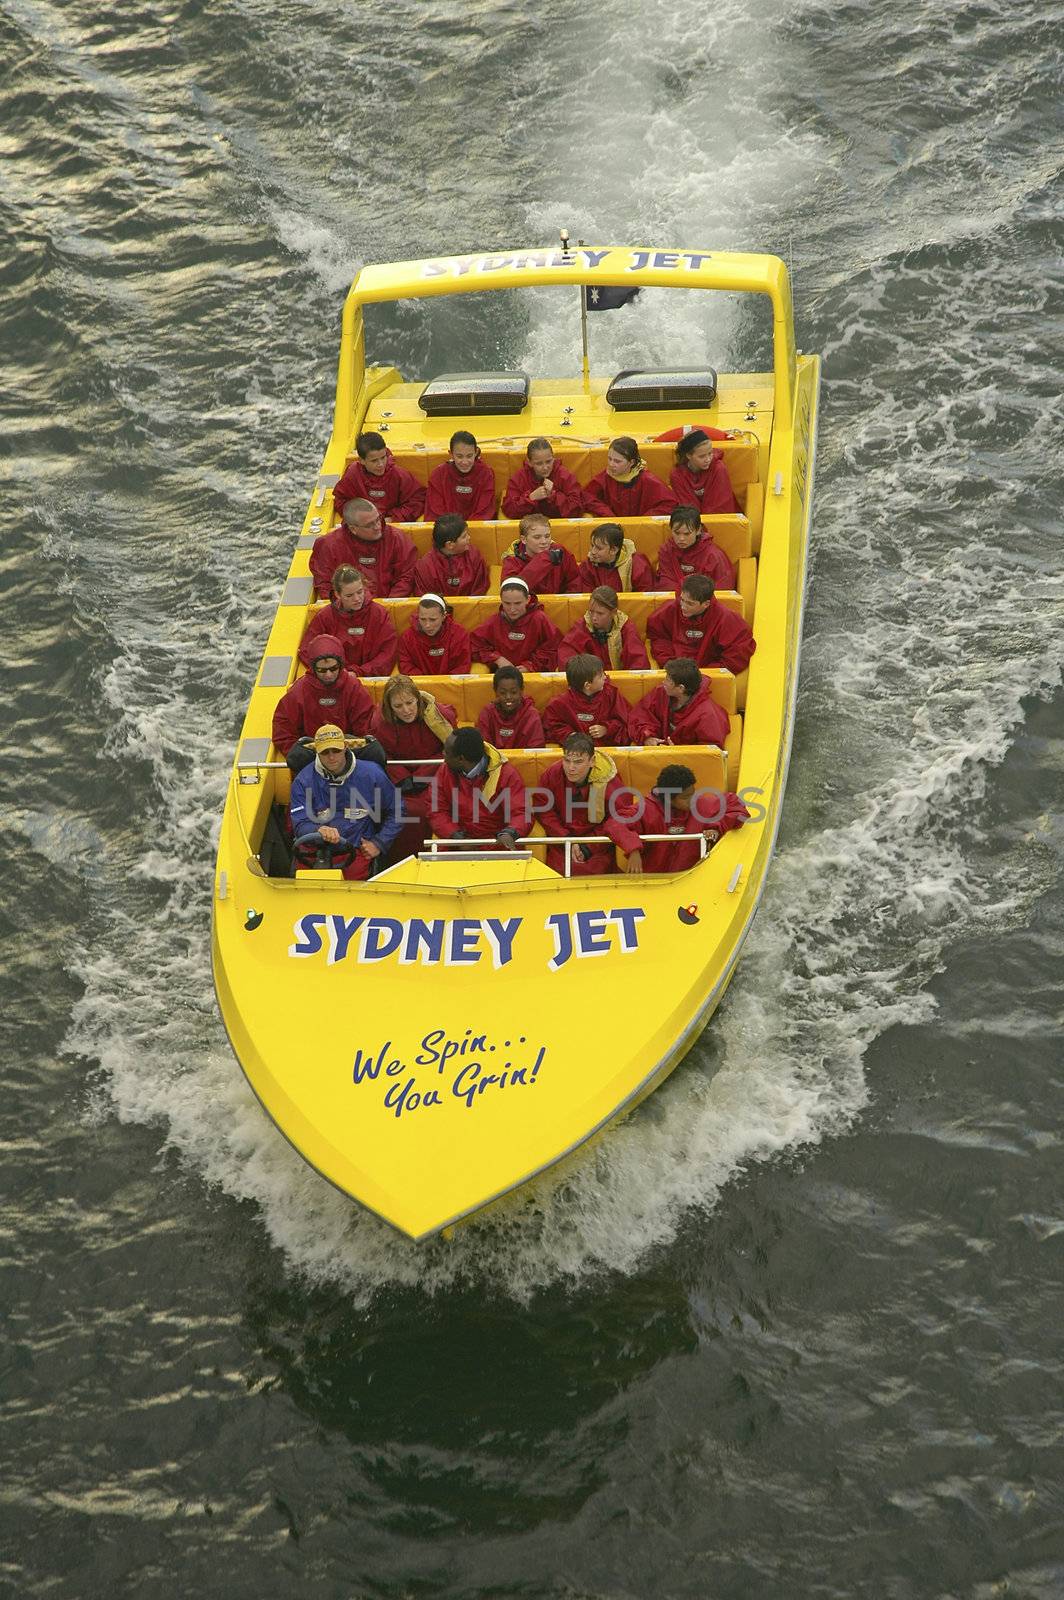 Sydney jet by rorem